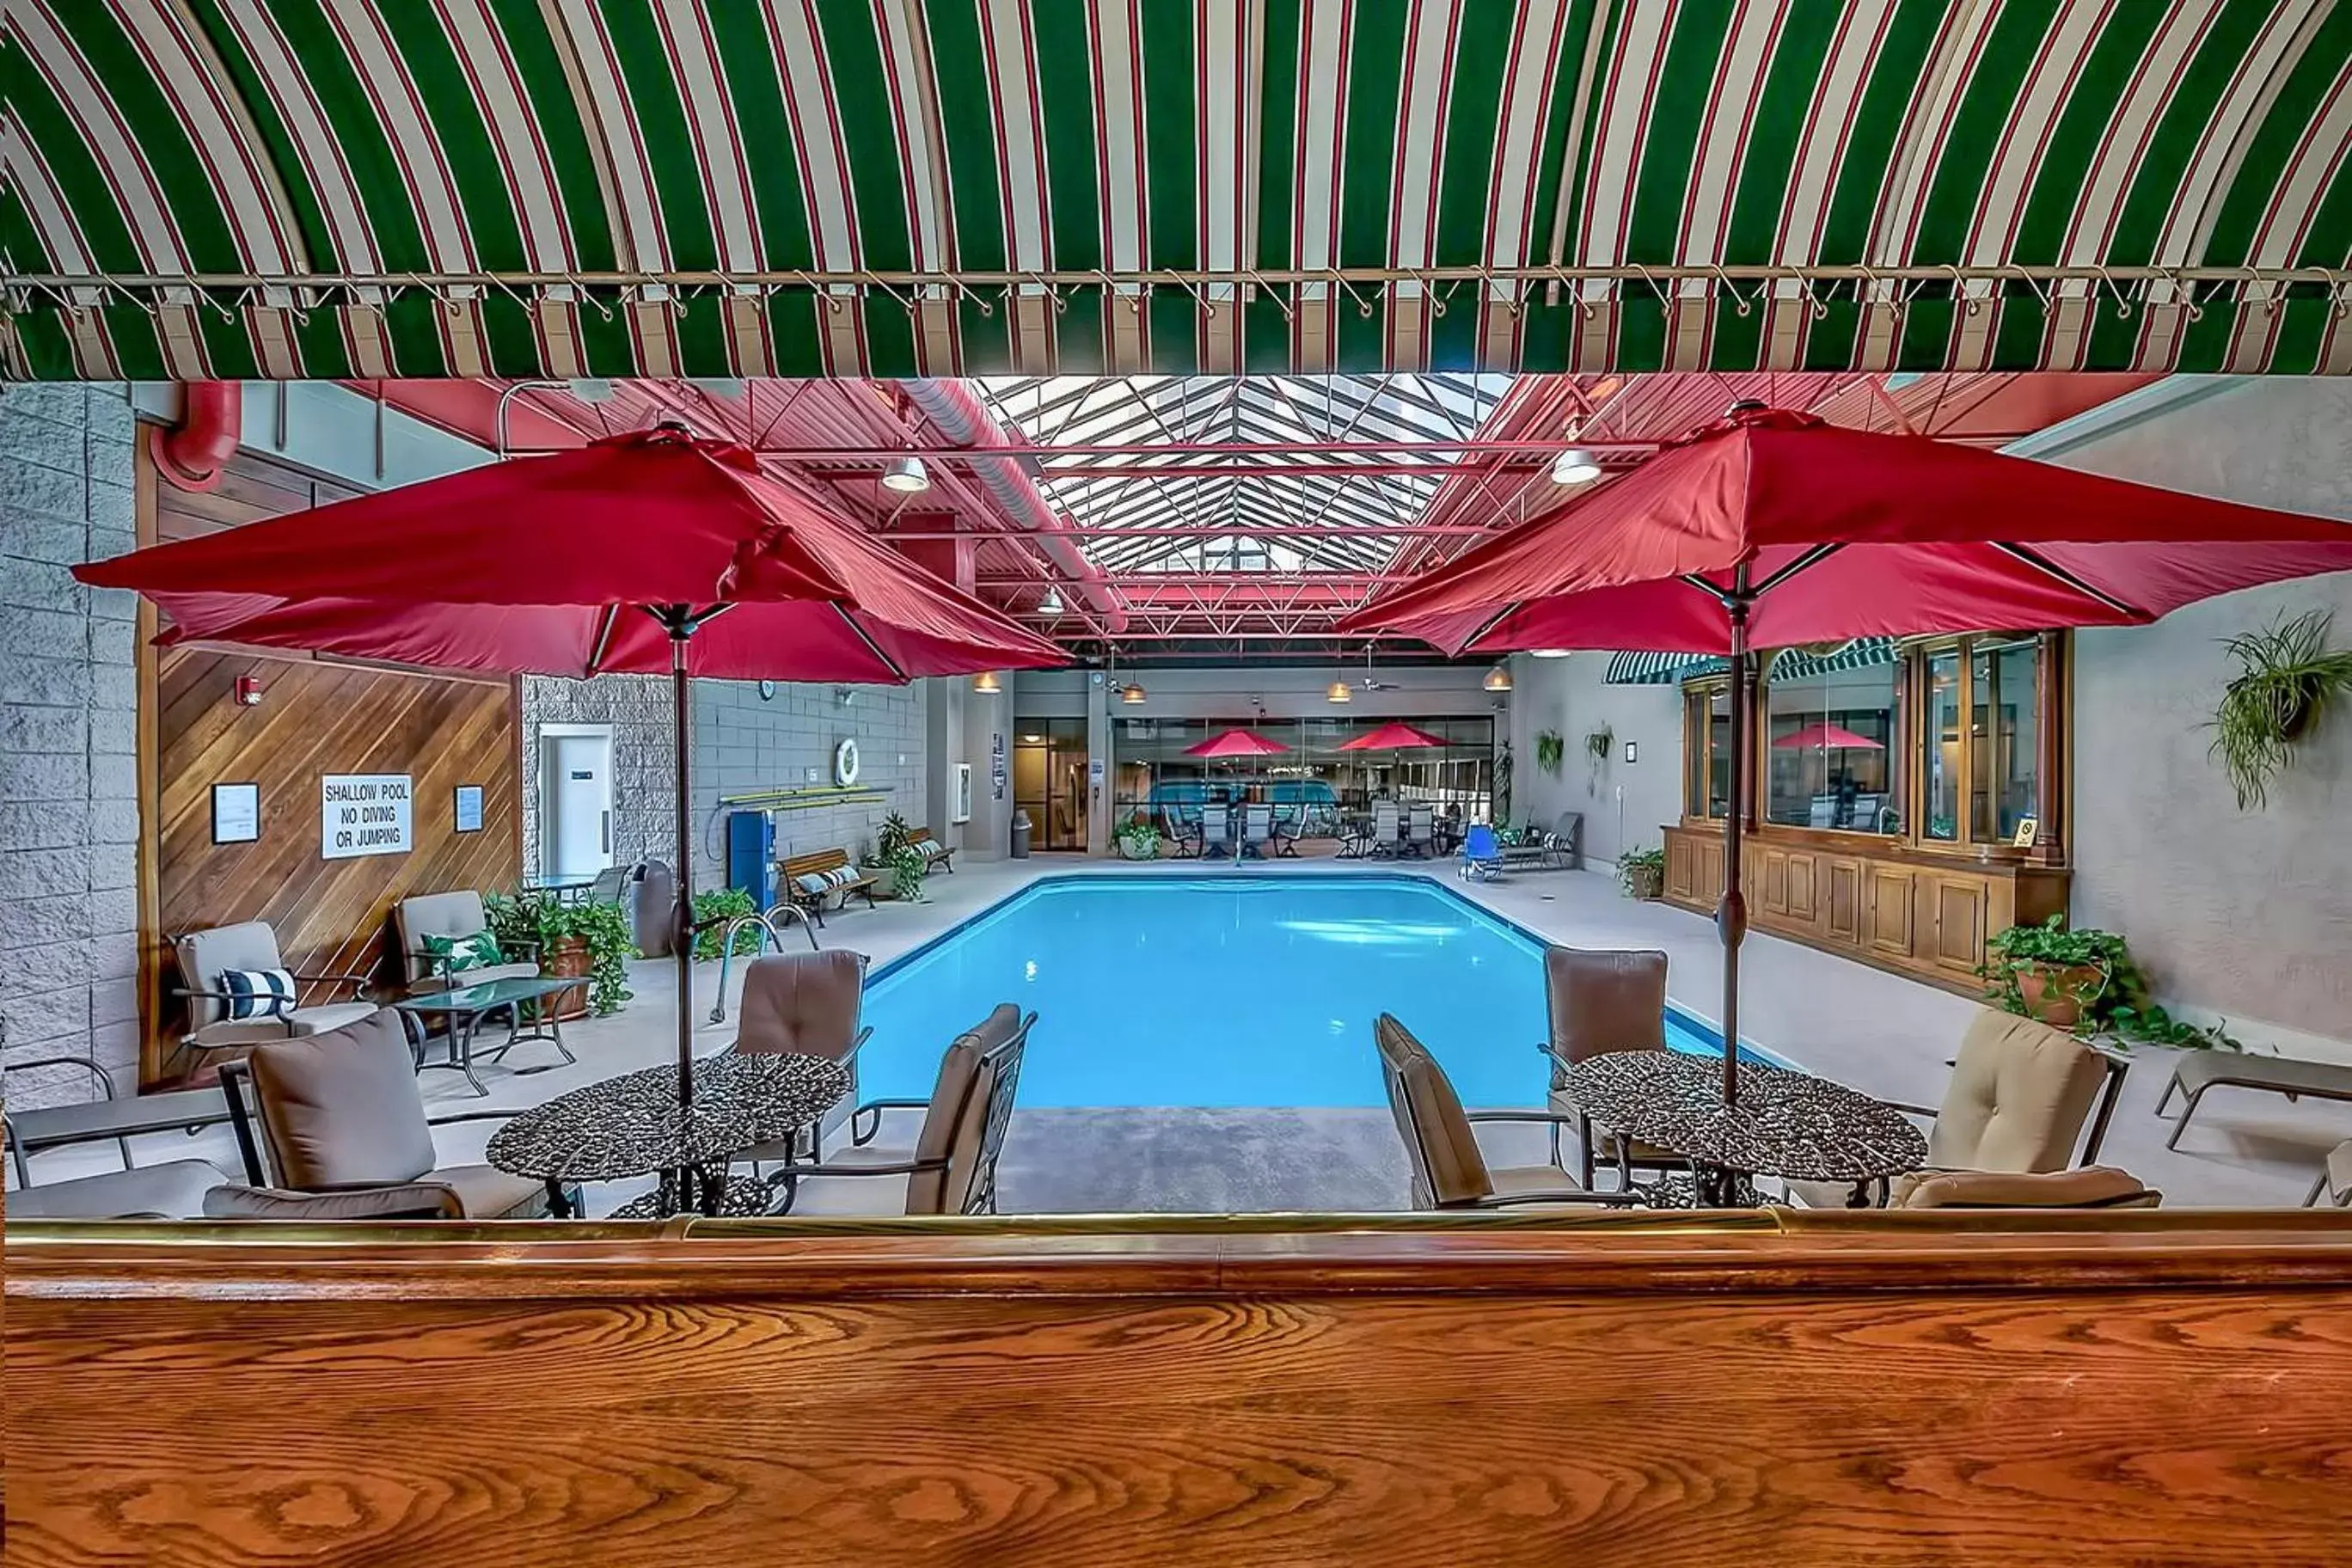 Swimming pool in Plaza Resort Club Reno